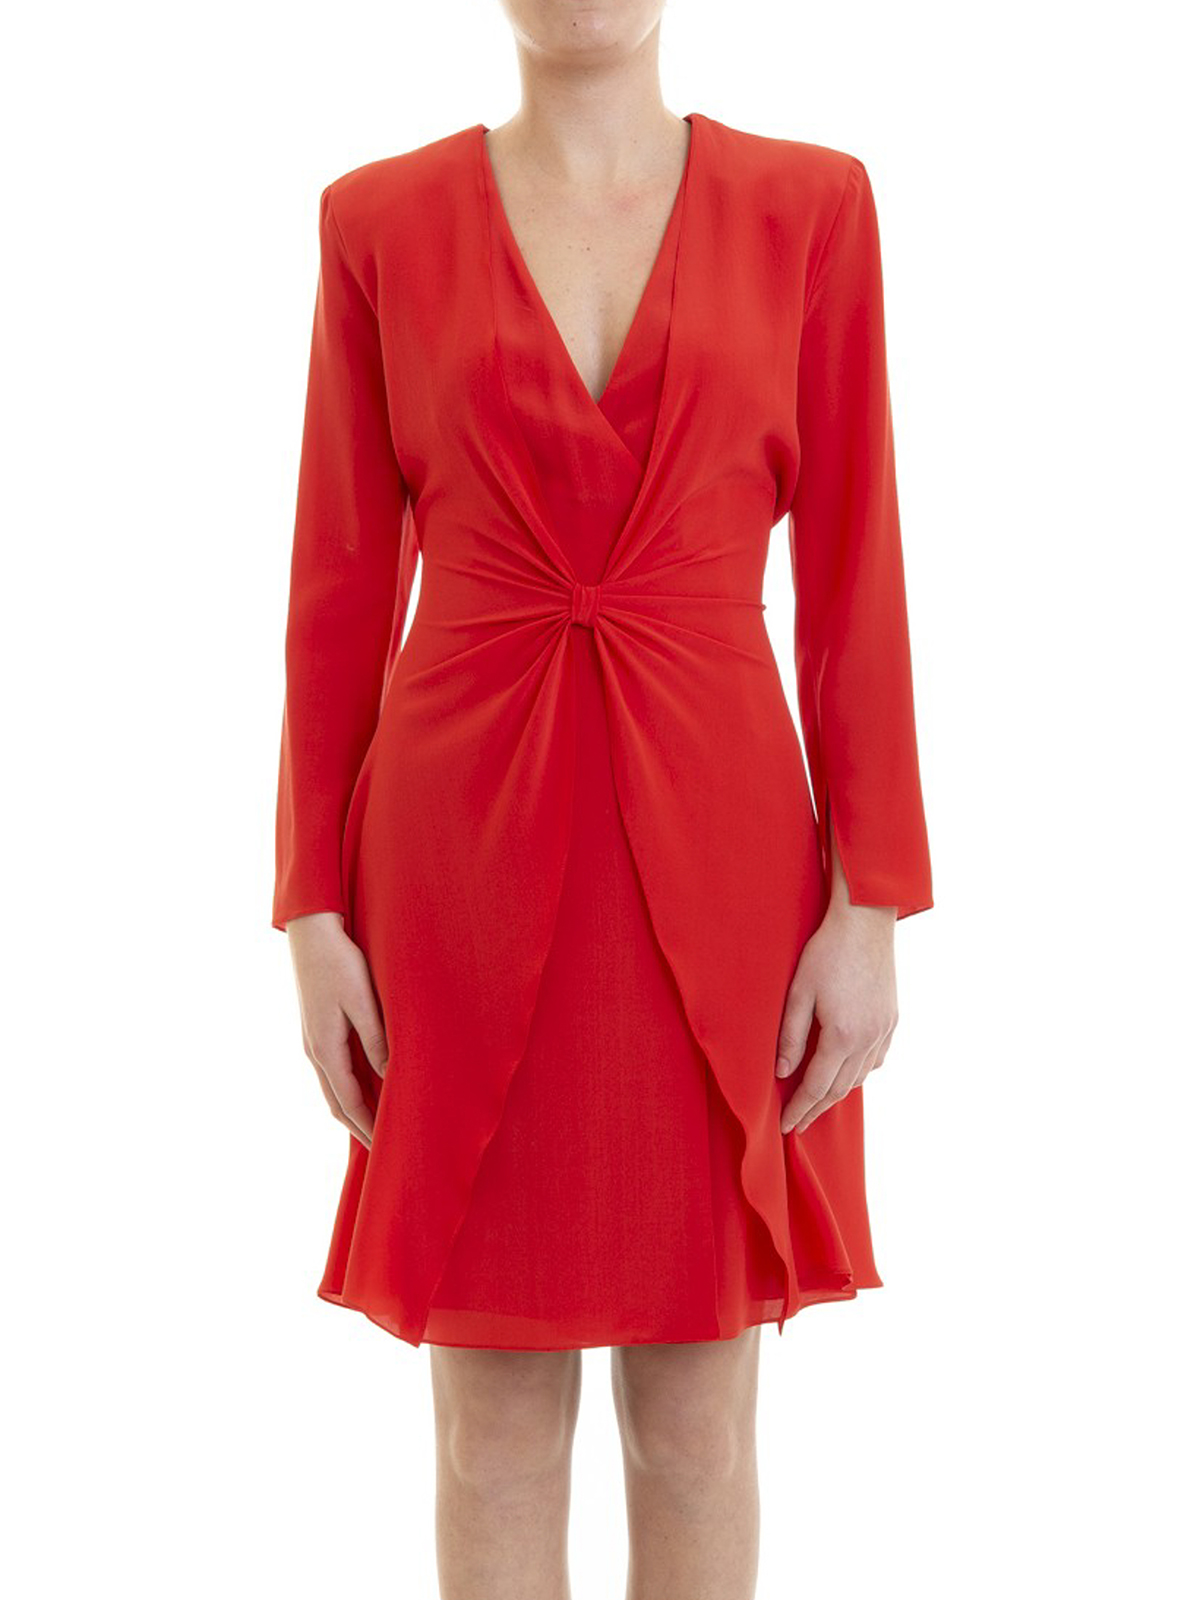 Emporio Armani - Red silk draped dress 